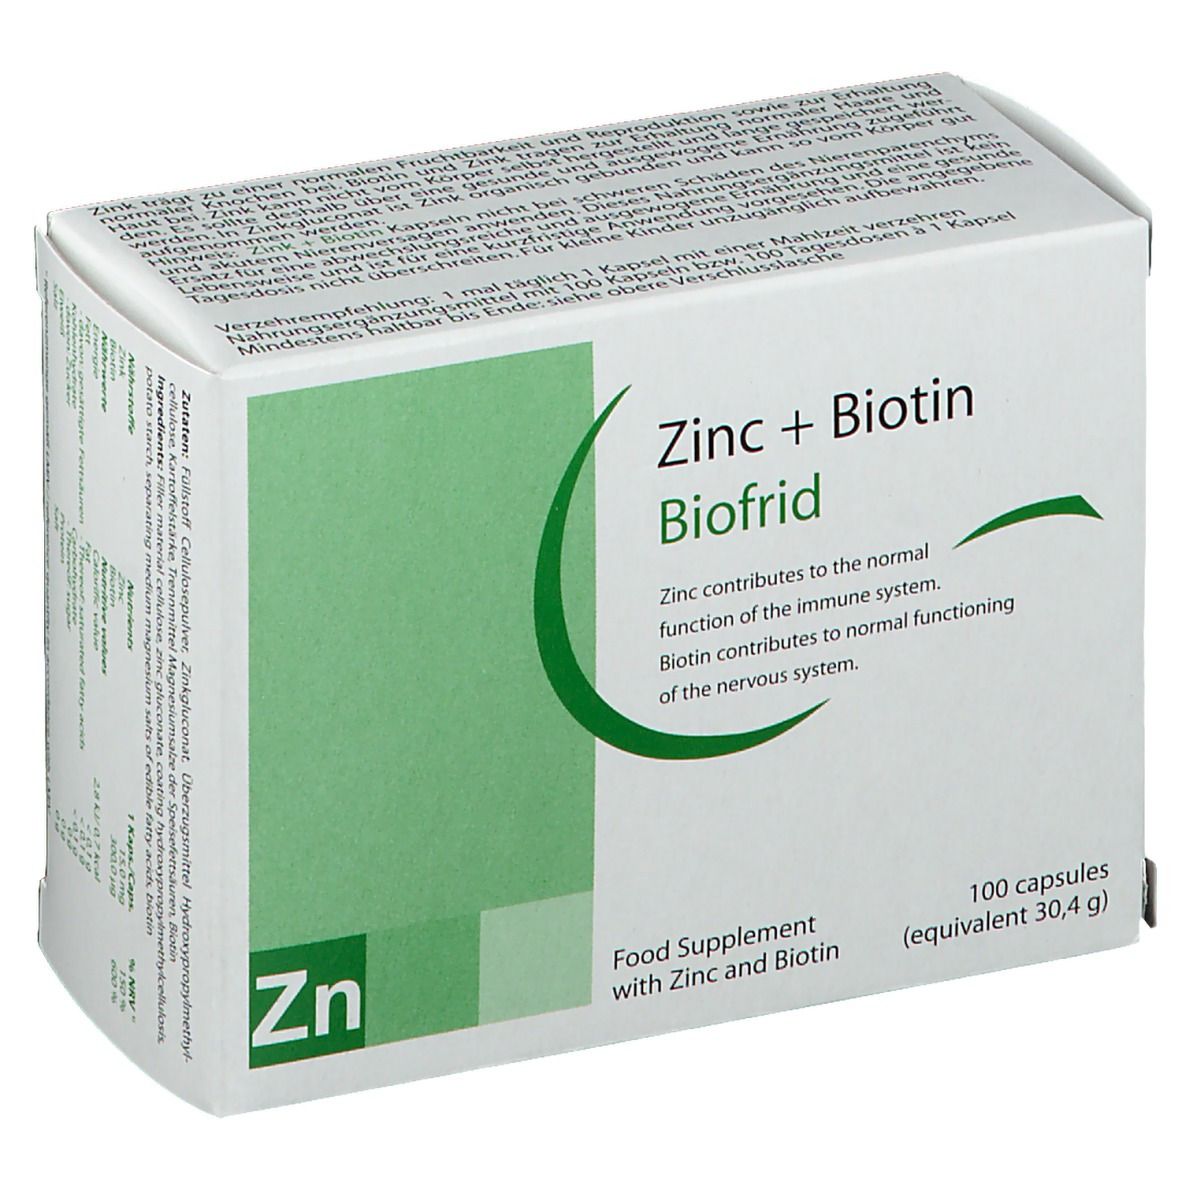 Zink + Biotin Biofrid